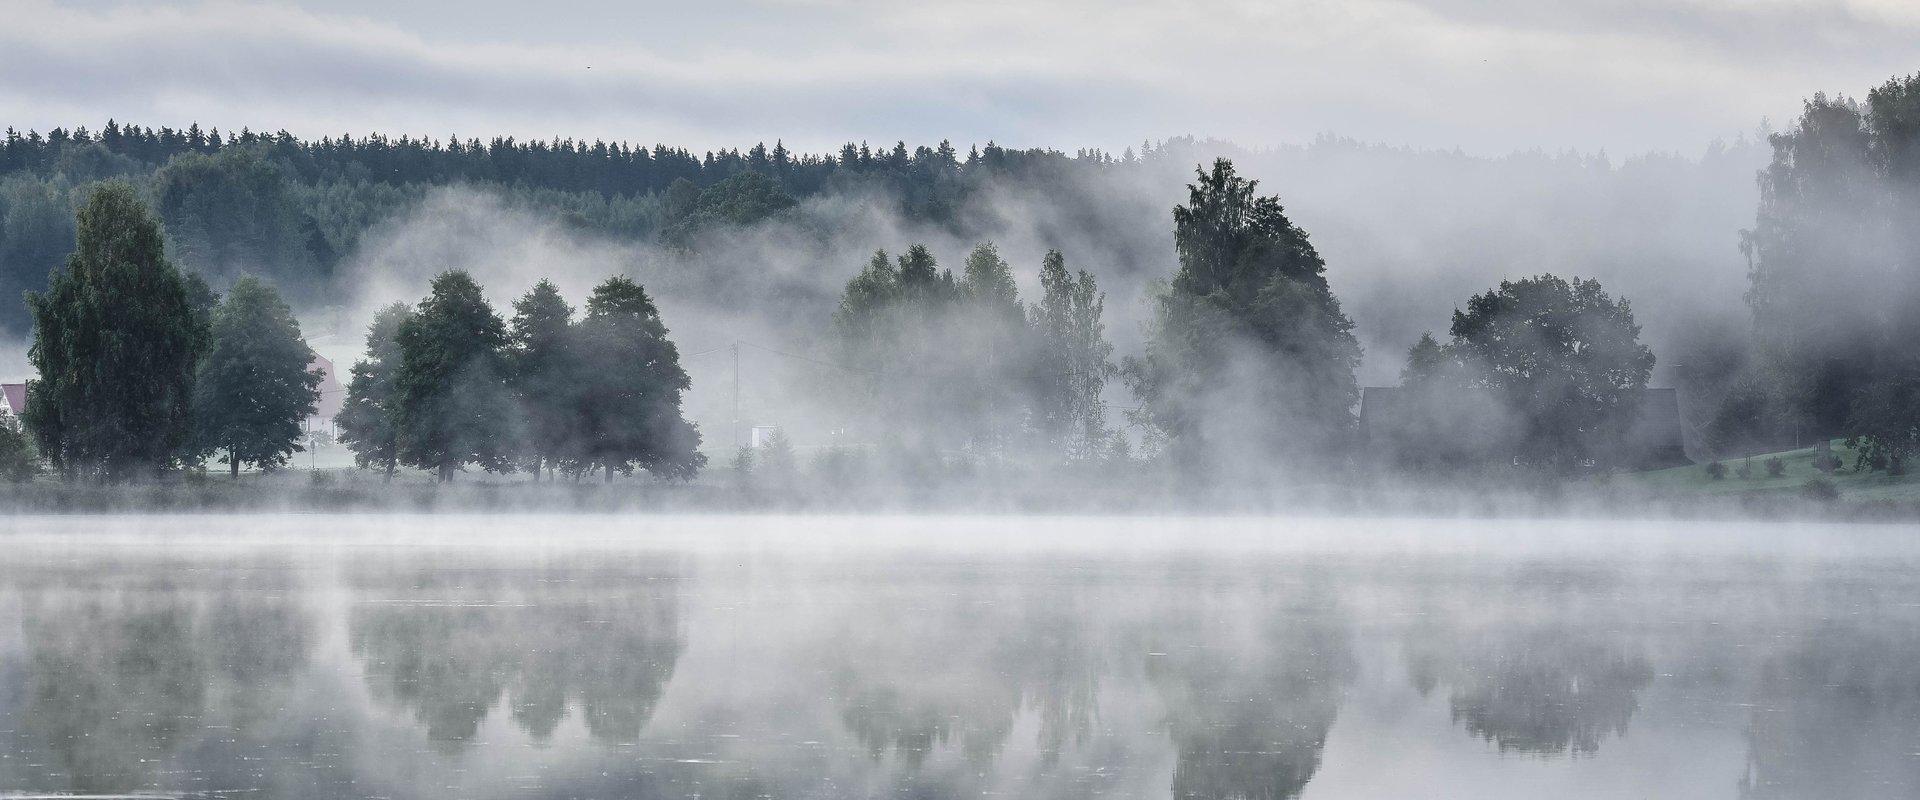 There are seven lakes at Rõuge primeval valley, which is 10 km long and 52 metres deep. The lakes include Kahrila, Tõugjärv, Ratasjärv, Kaussjärv, Rõu